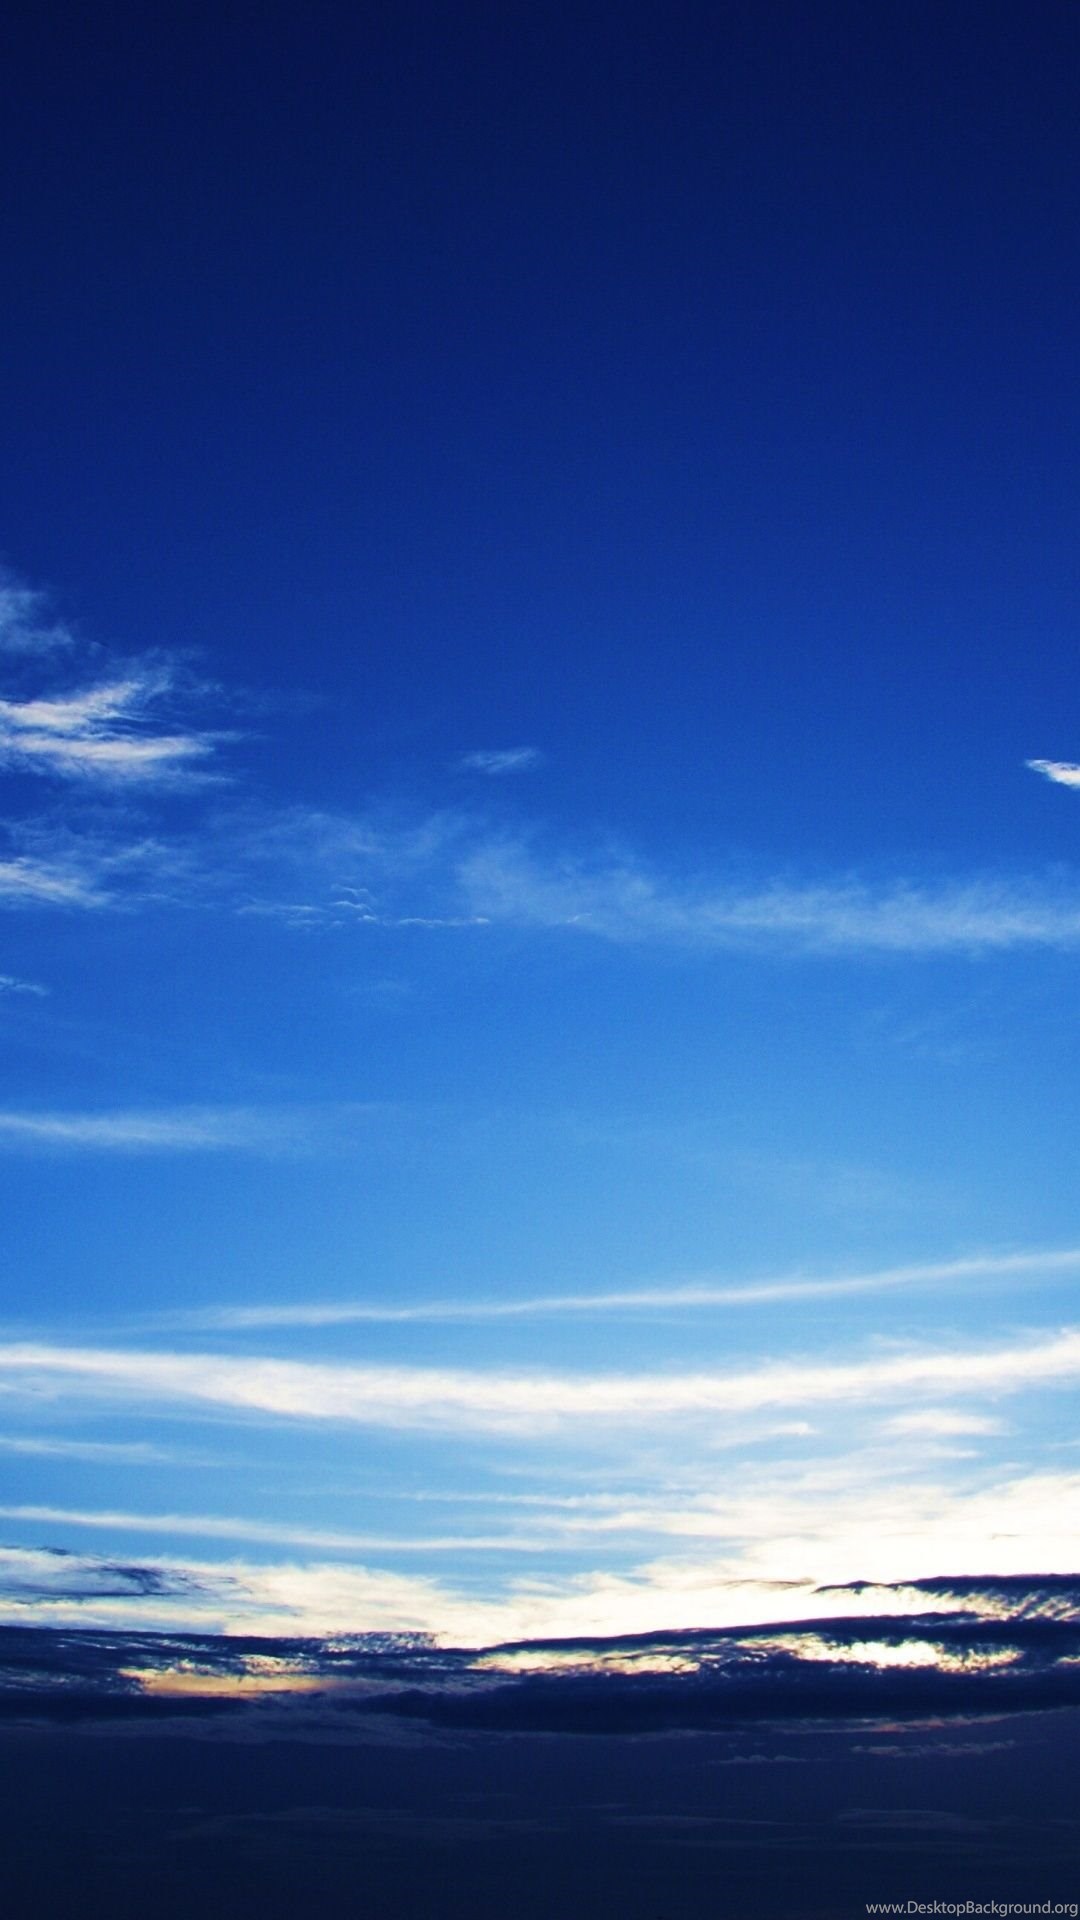 sky wallpaper for iphone,sky,blue,daytime,cloud,horizon